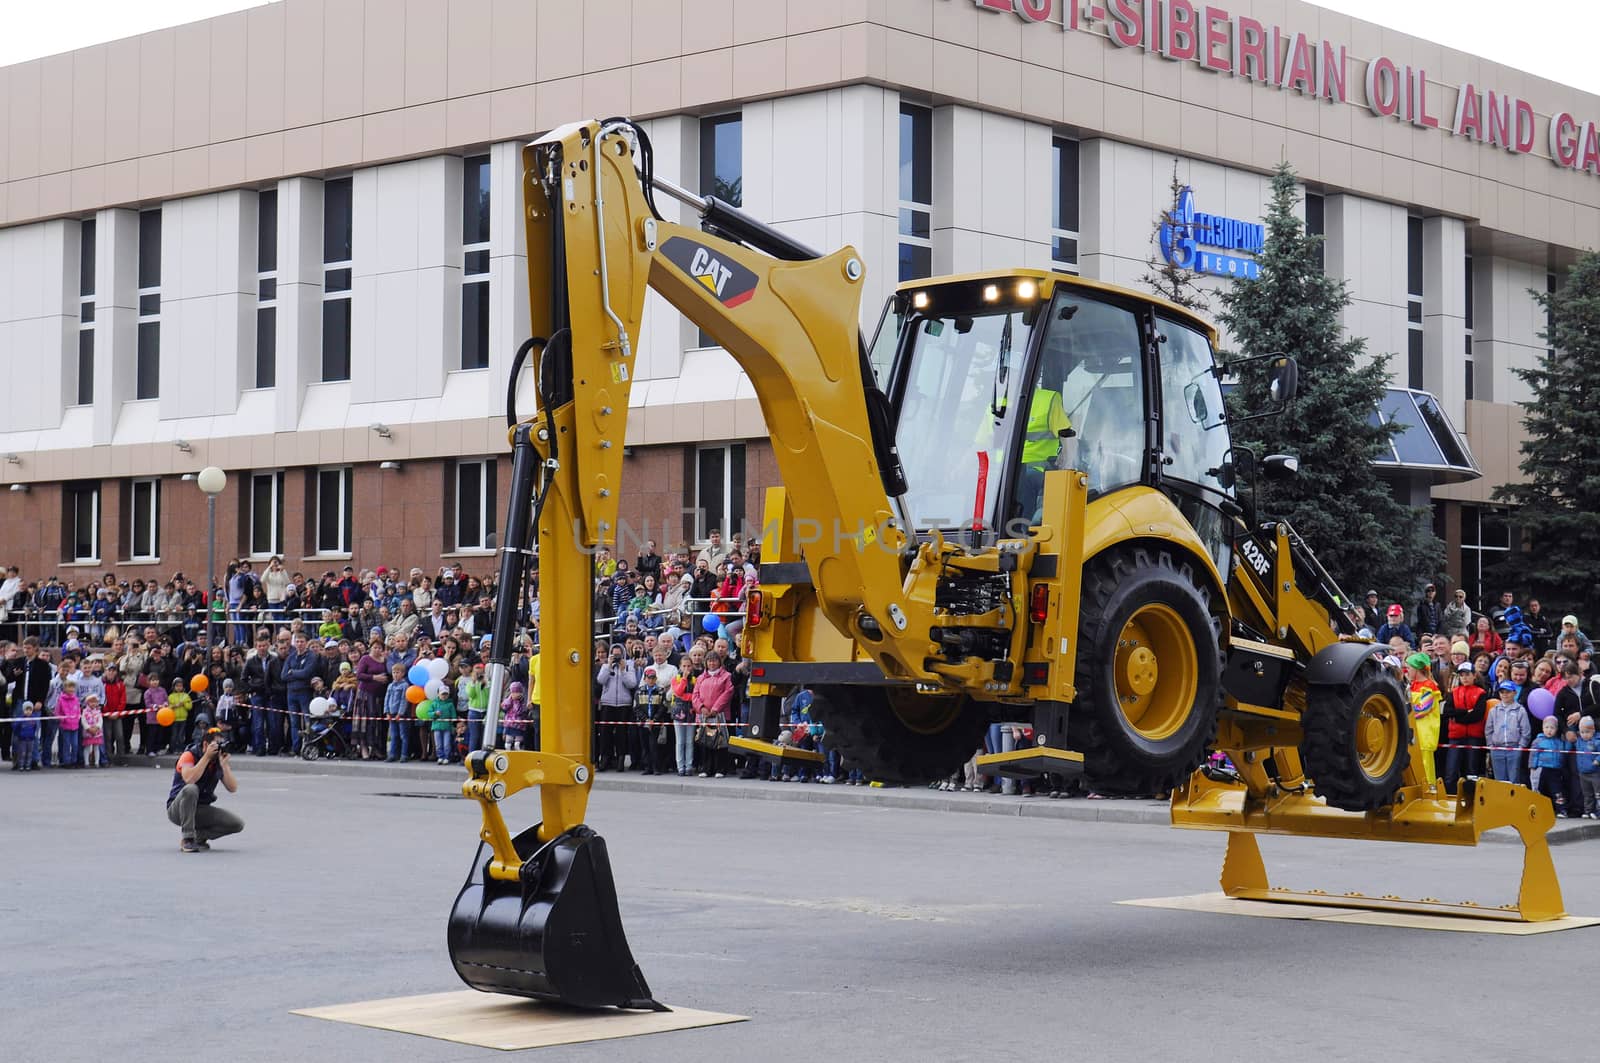 City Day of Tyumen, on July 26, 2014, show of dancing excavators by veronka72